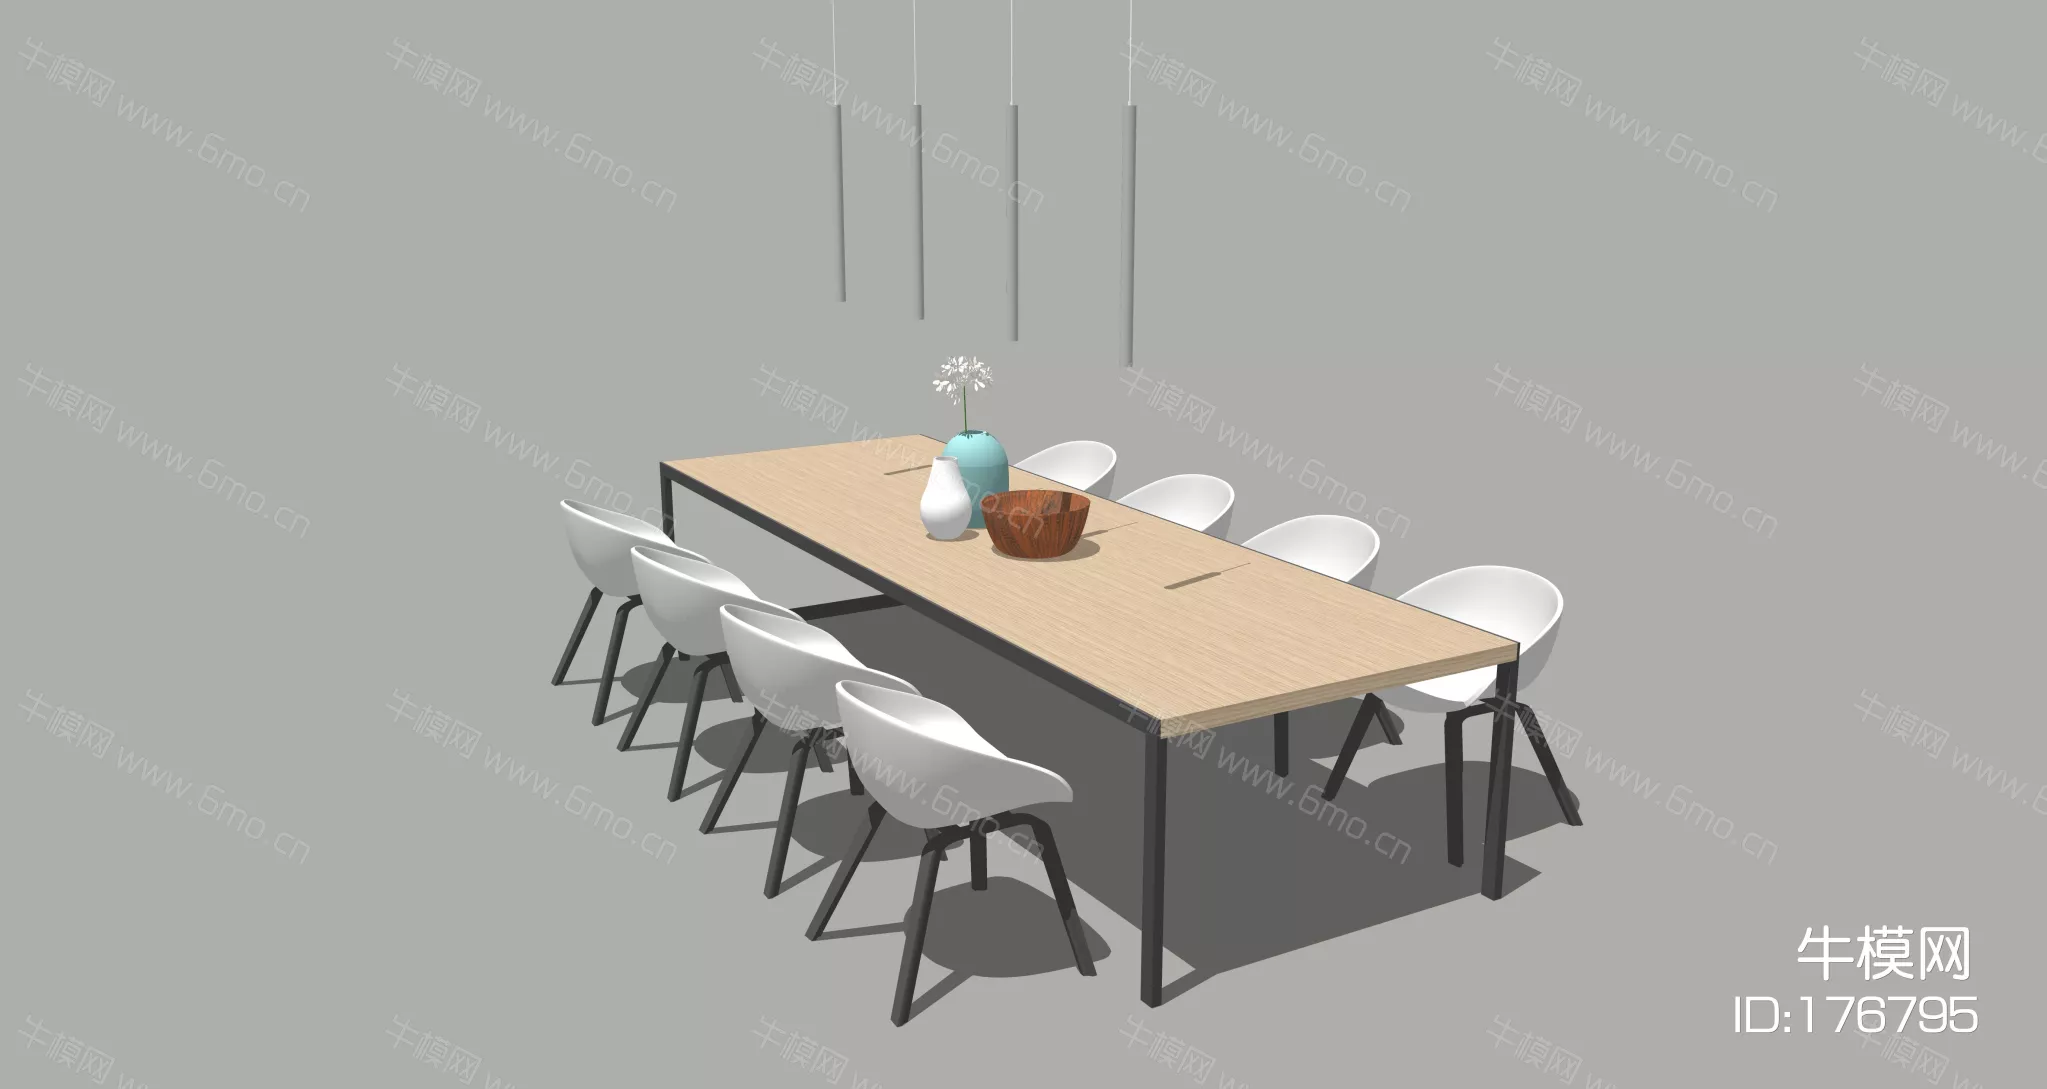 NORDIC DINING TABLE SET - SKETCHUP 3D MODEL - ENSCAPE - 176795